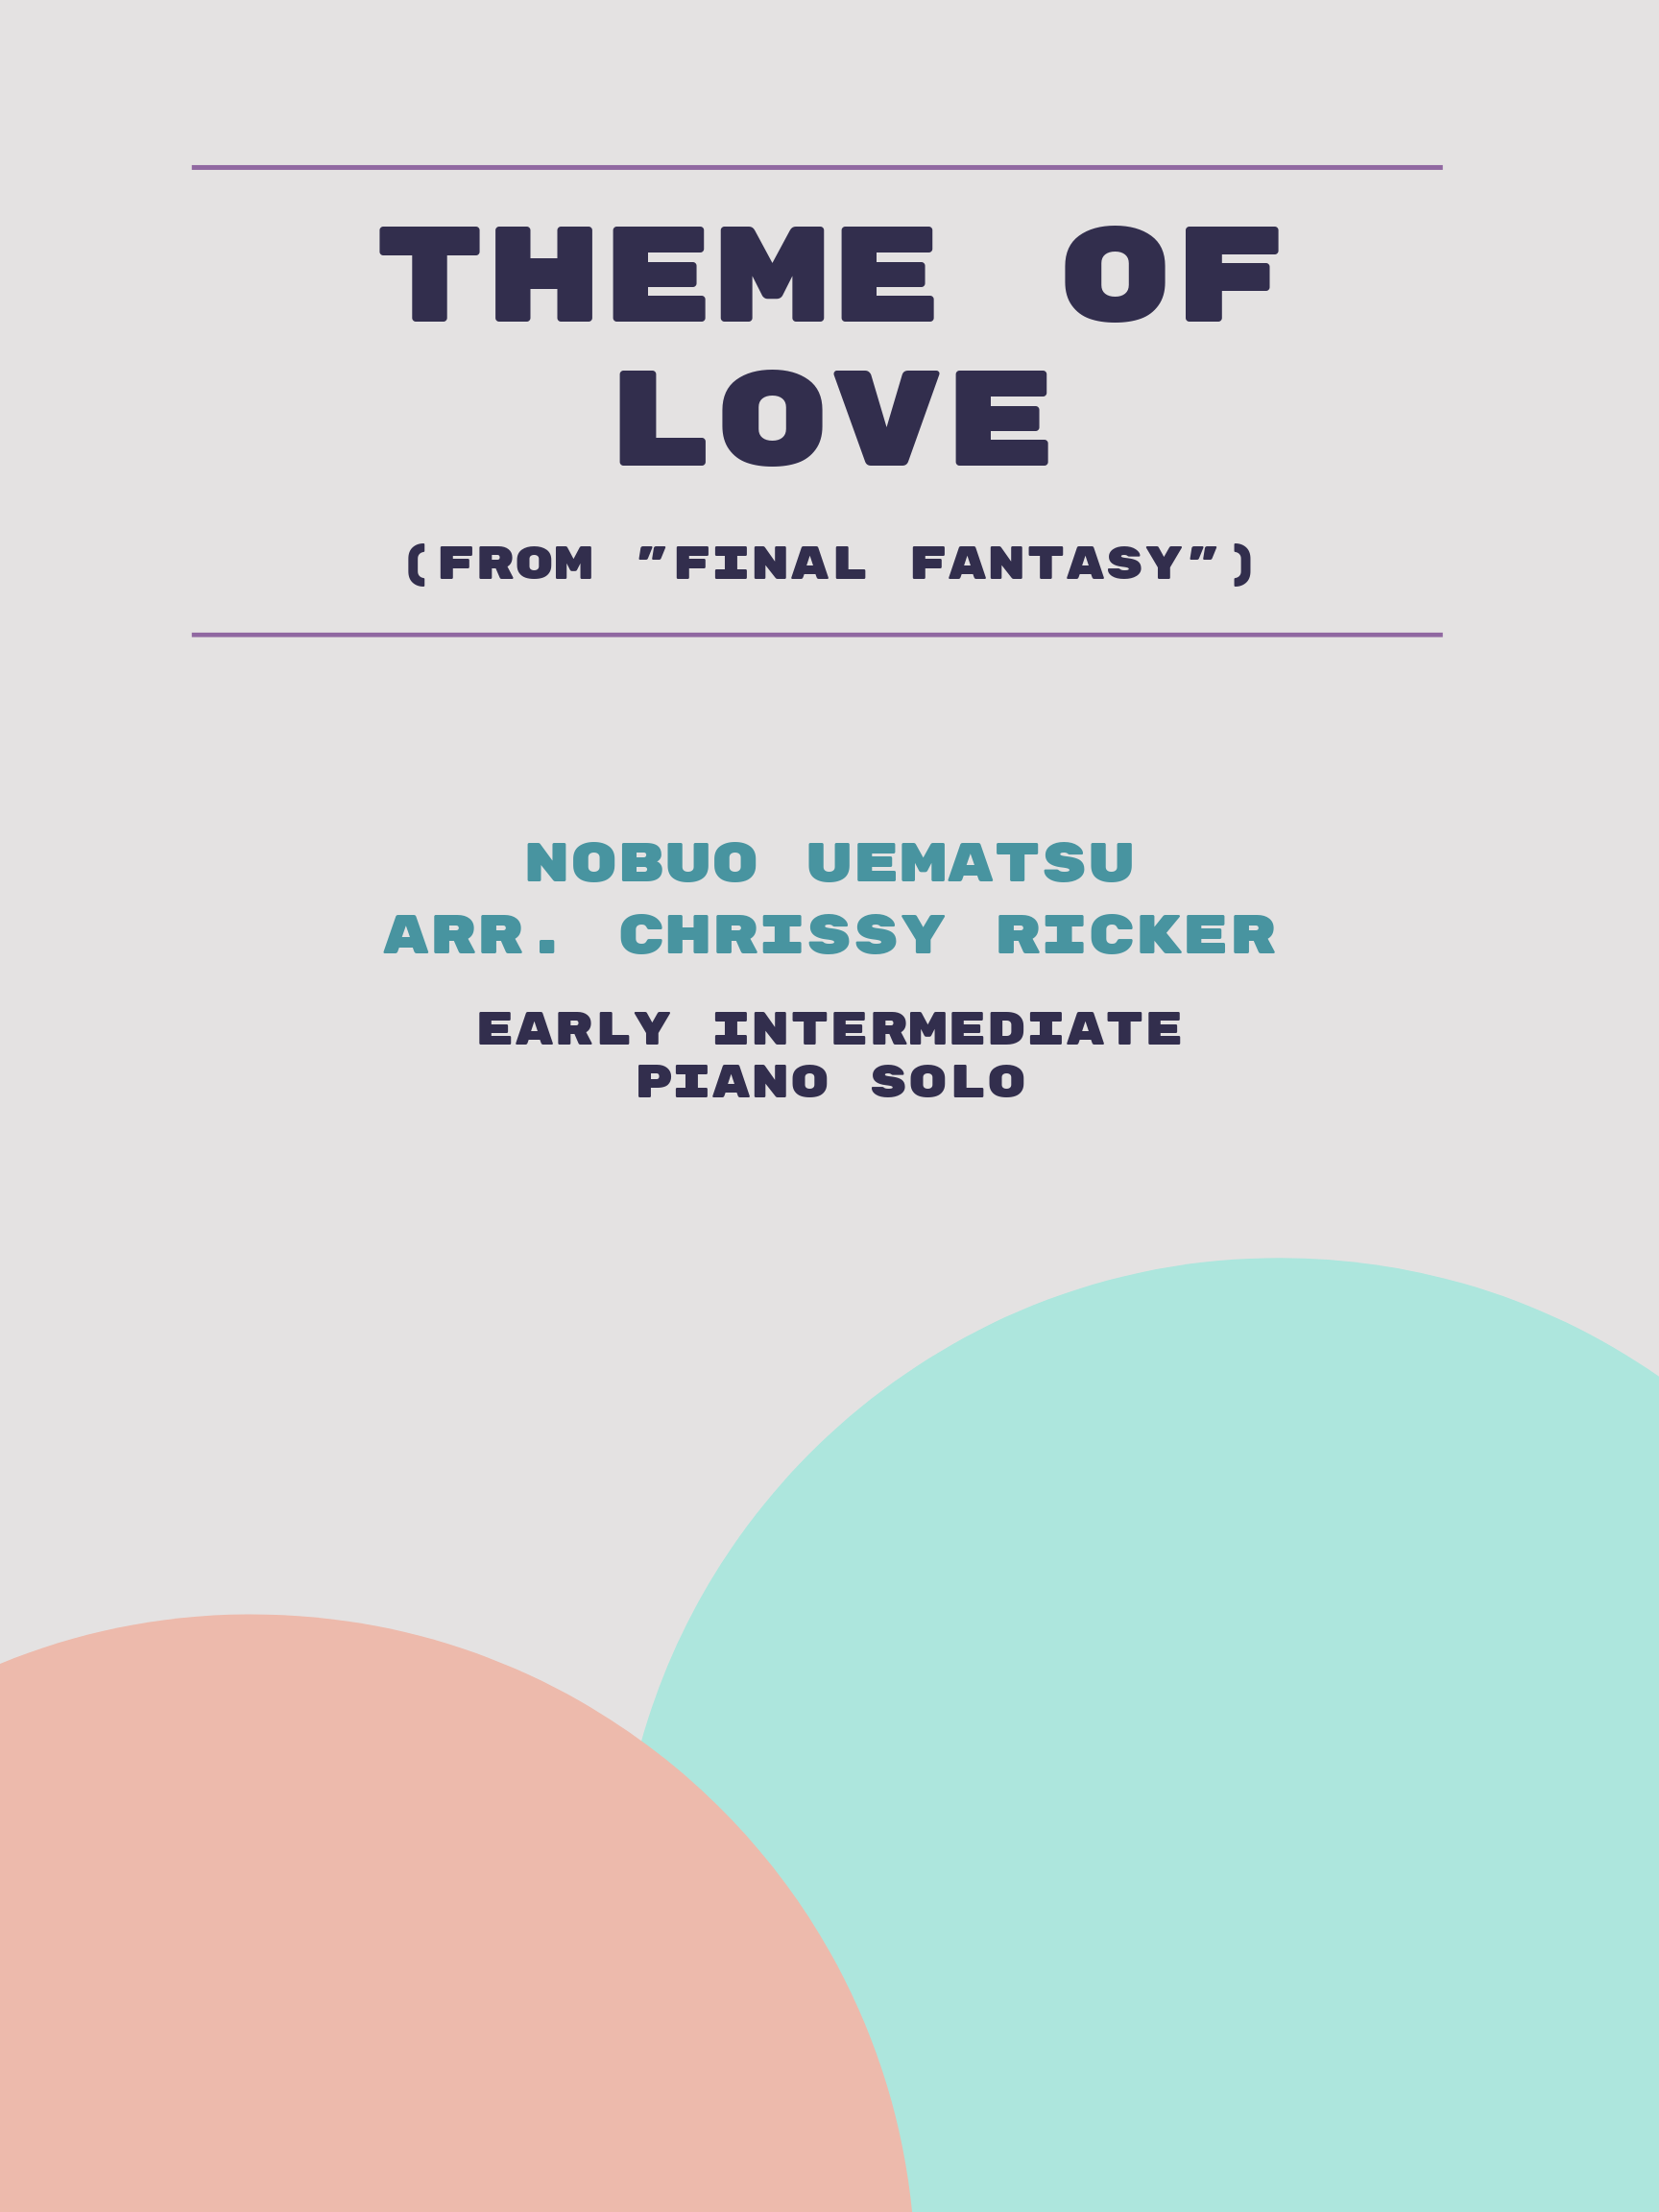 Theme of Love by Nobuo Uematsu